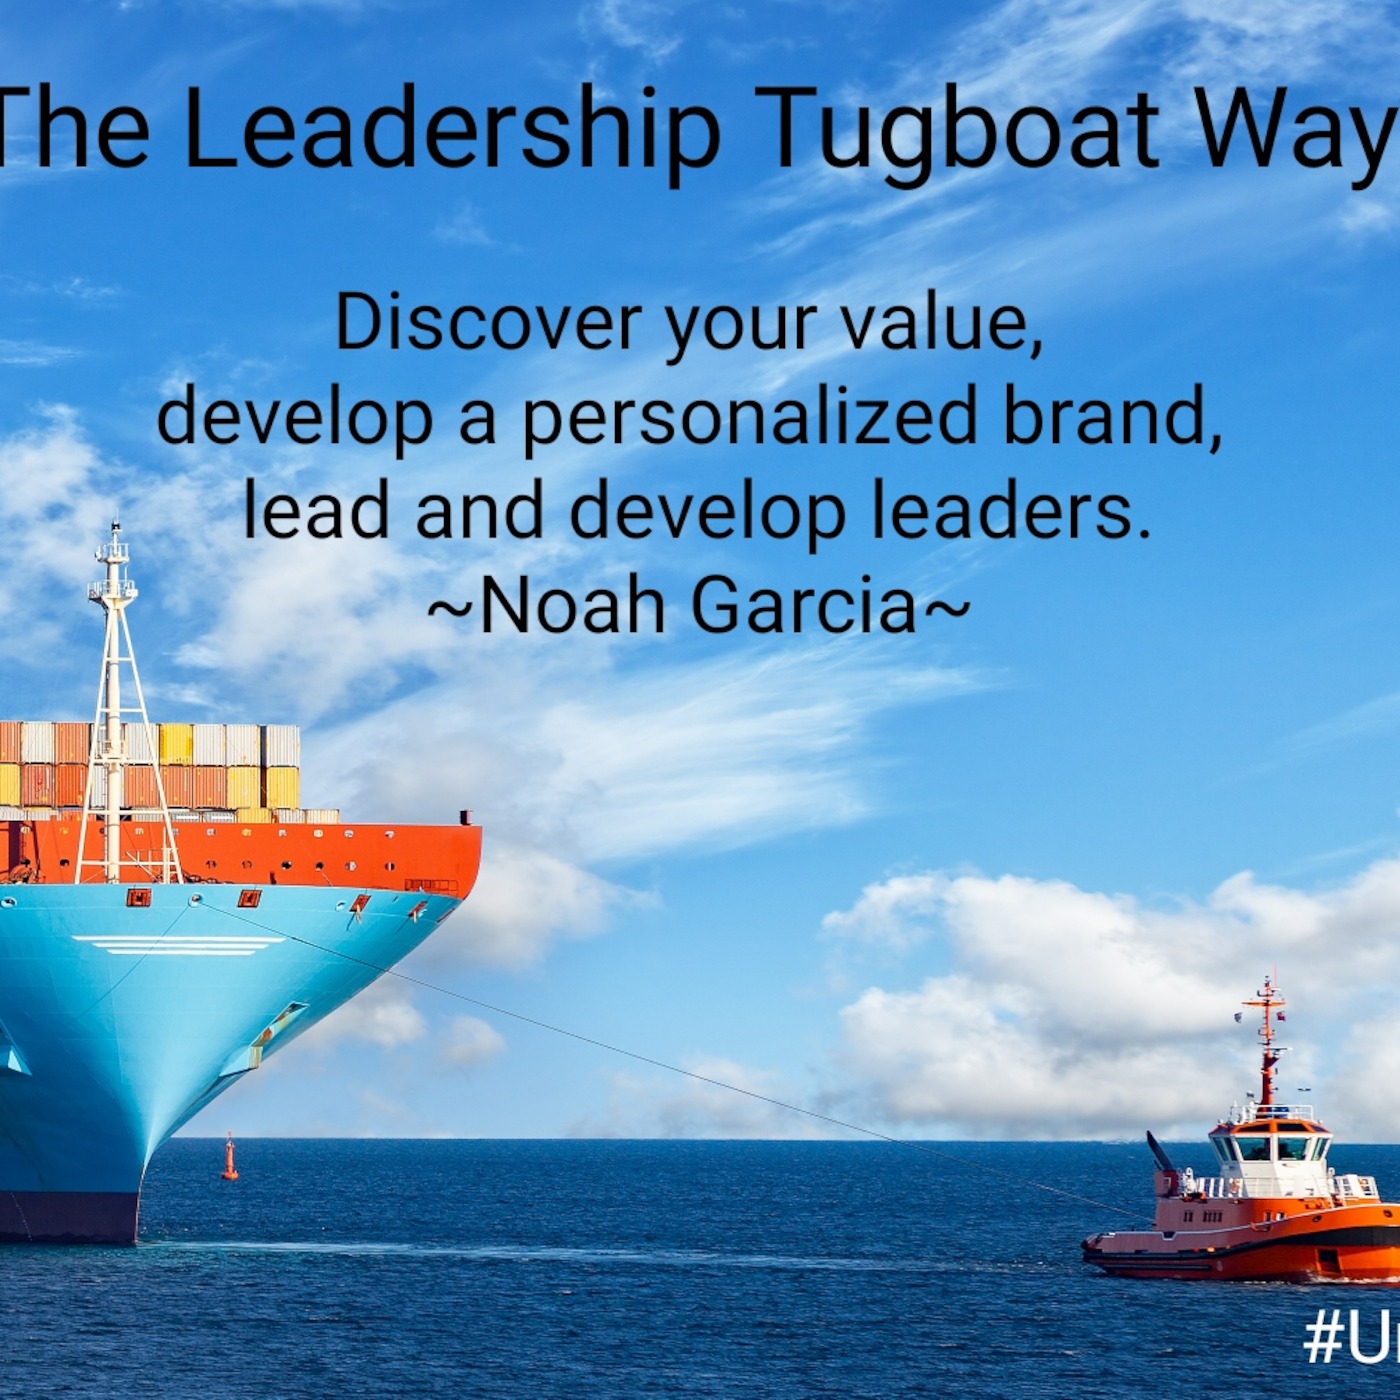 The Leadership Tugboat Way